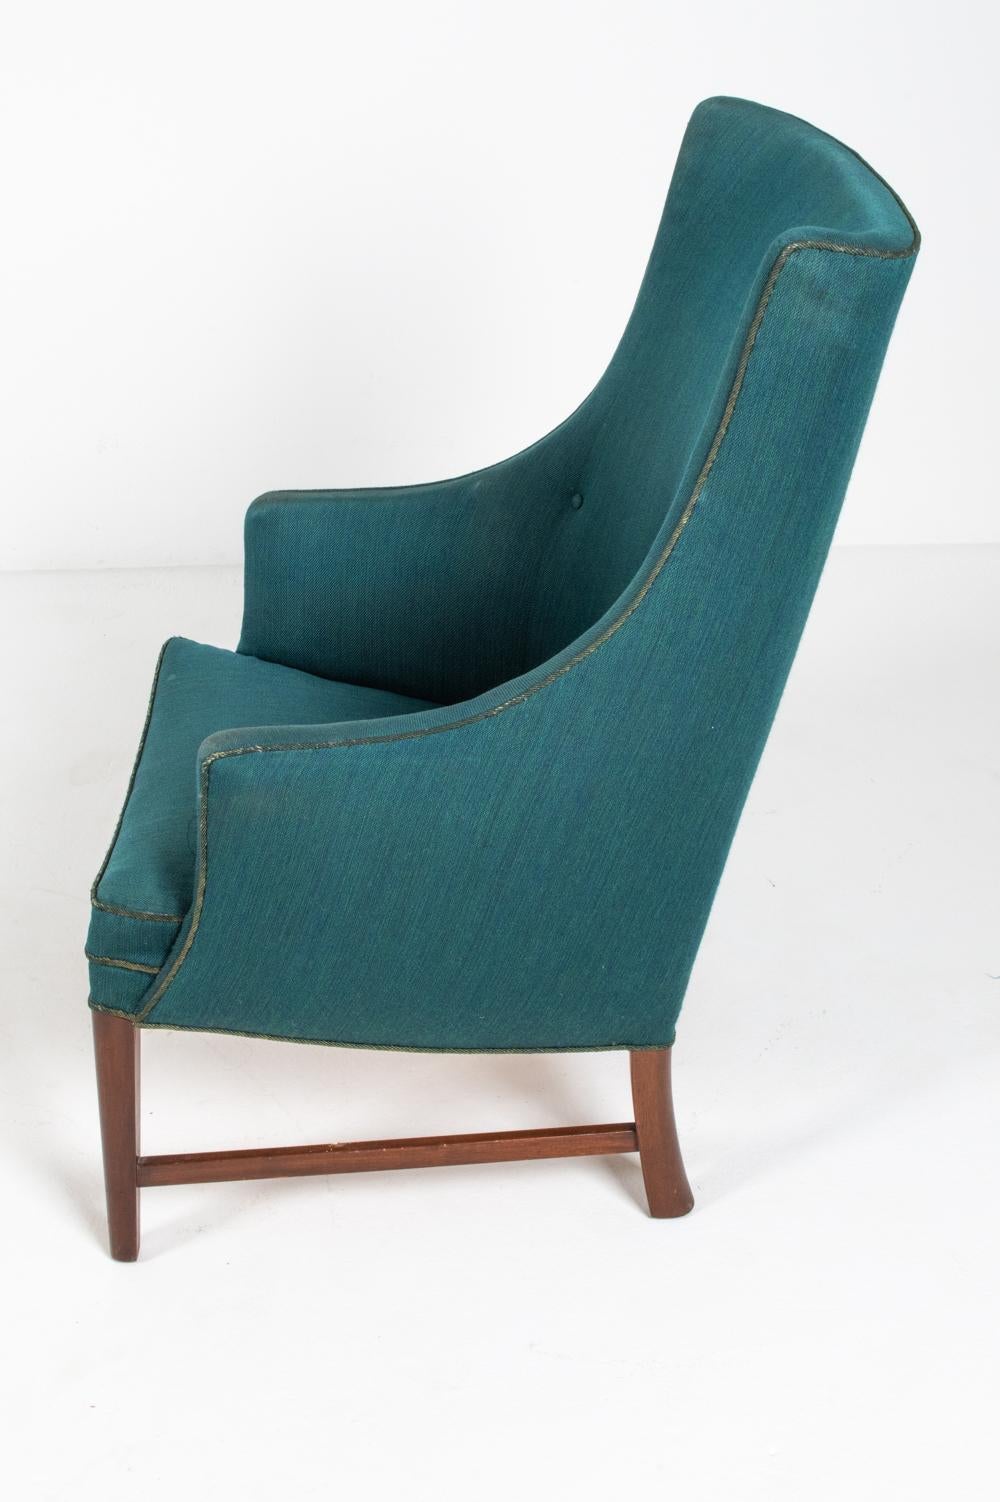 Frits Henningsen Danish Highback Lounge Chair, c. 1940's For Sale 5